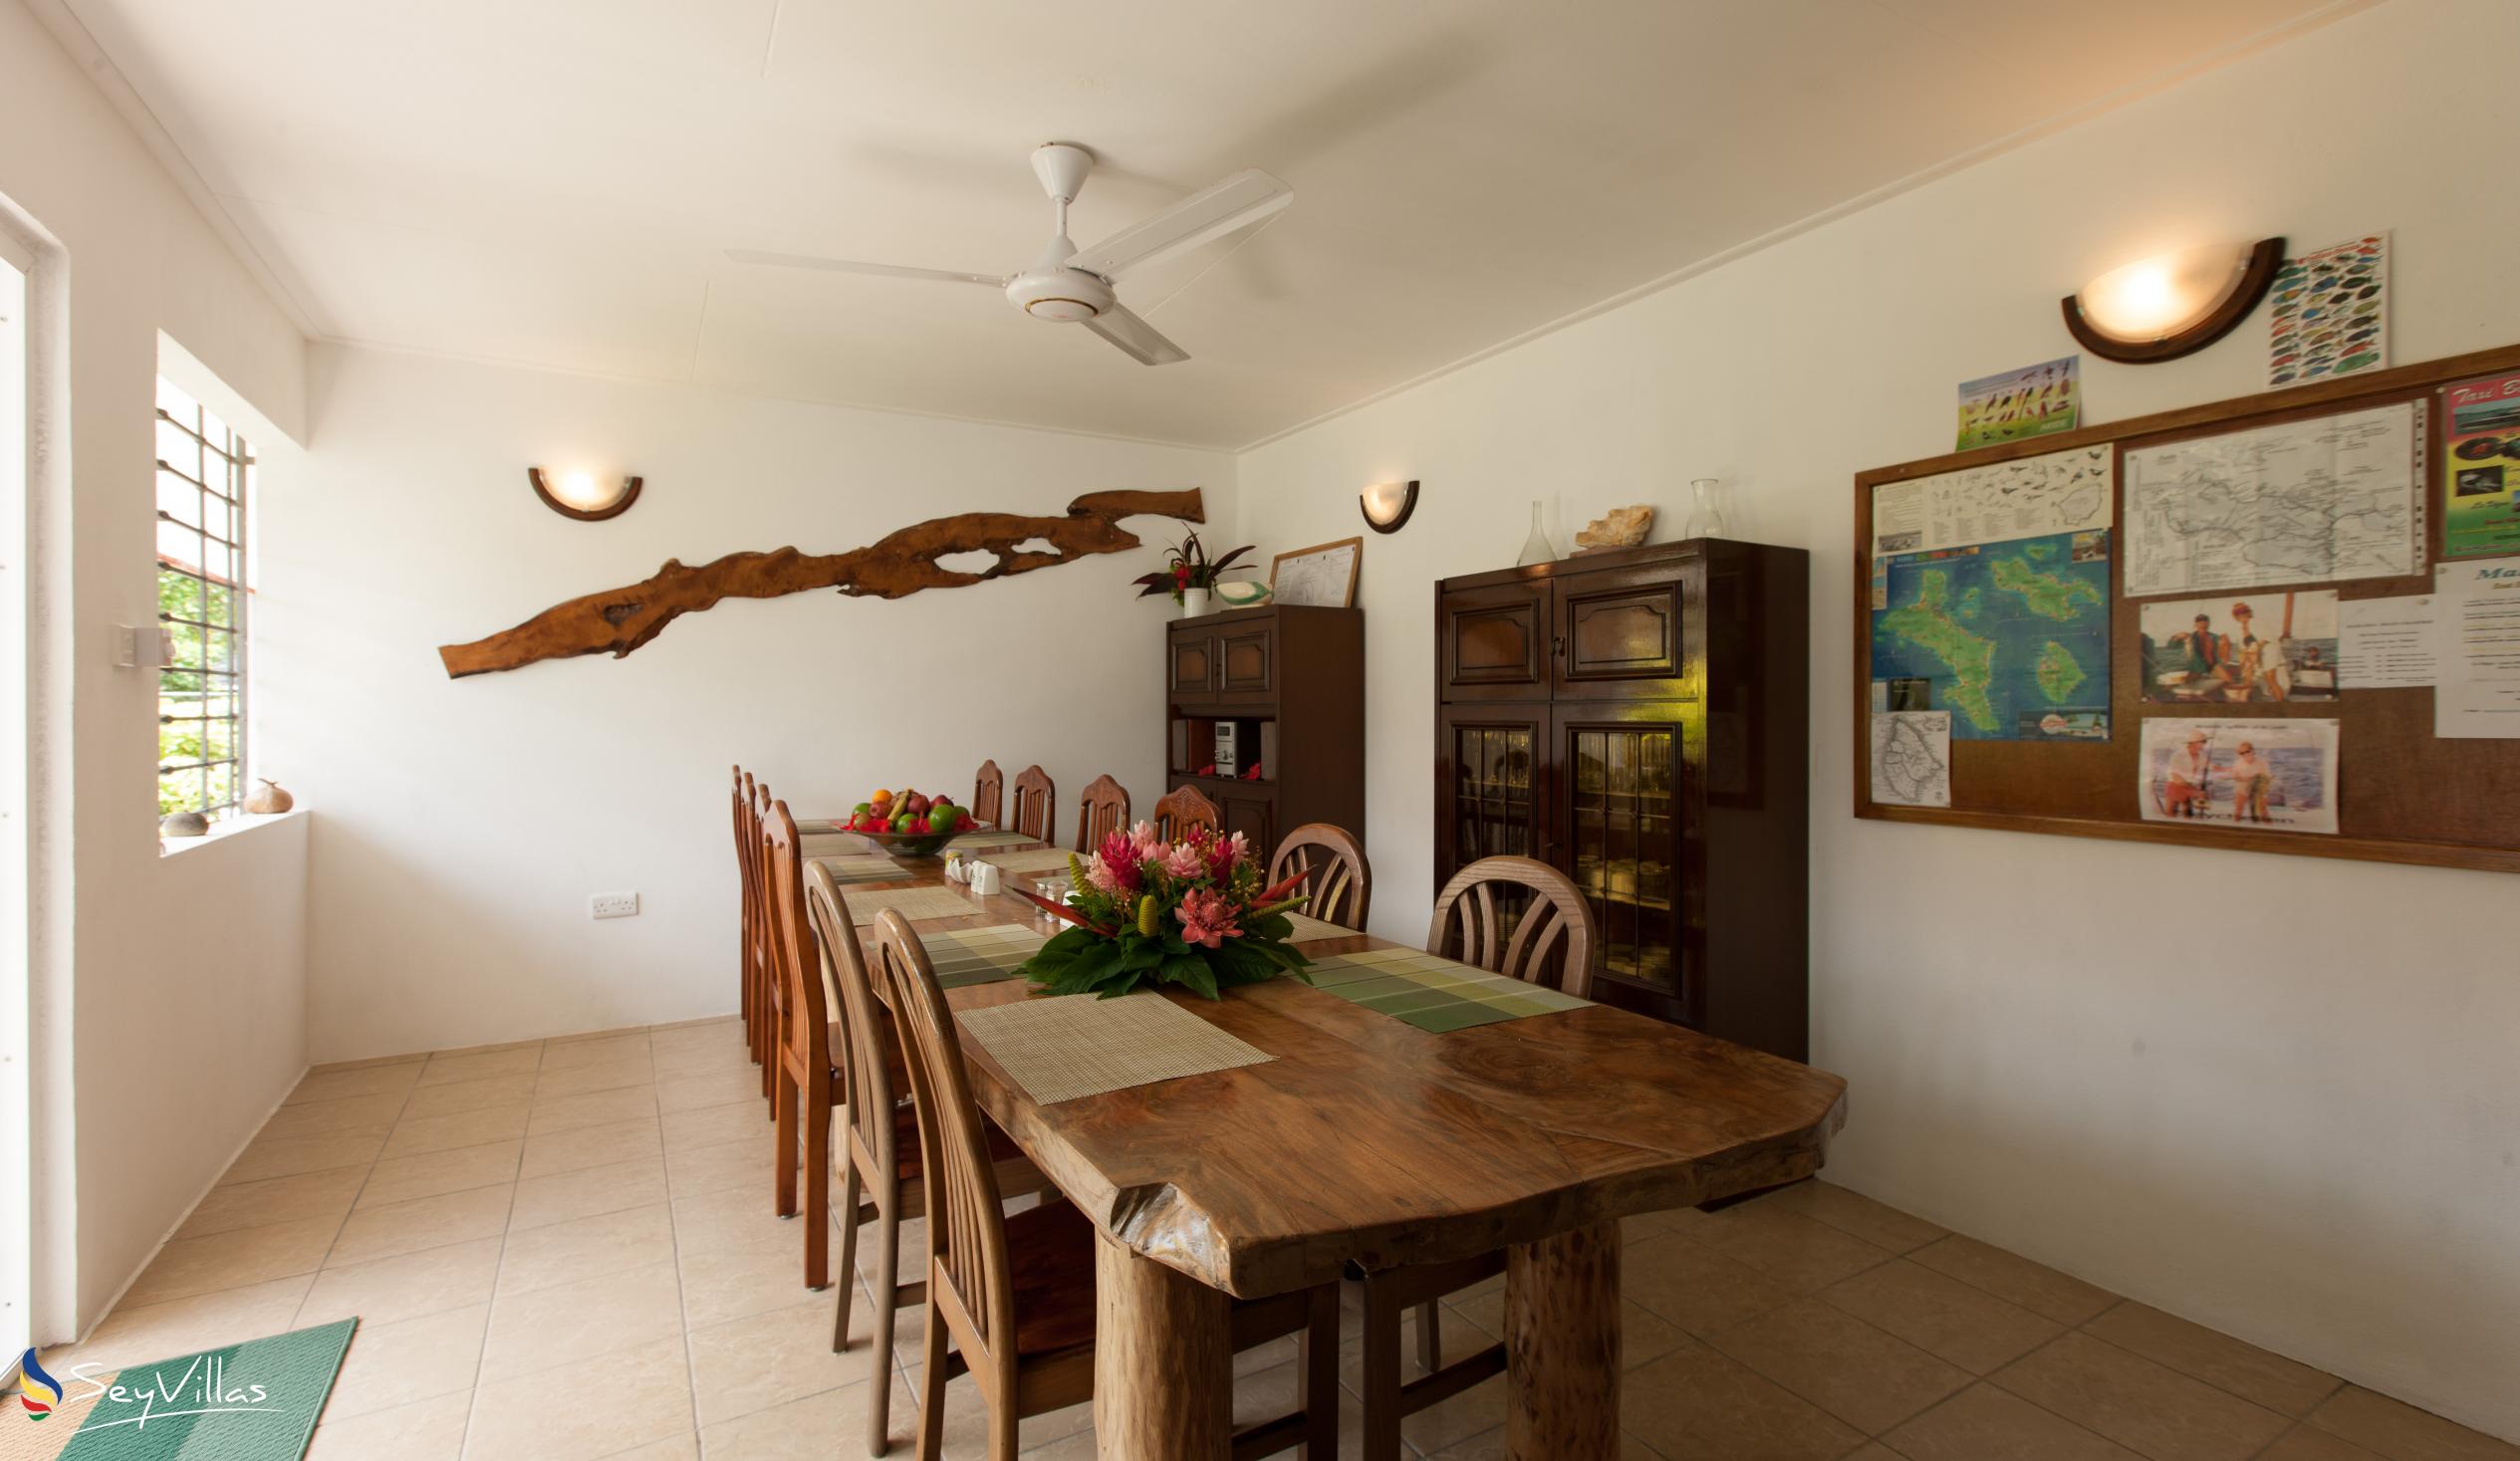 Photo 9: Le Relax St. Joseph Guest House - Indoor area - Praslin (Seychelles)